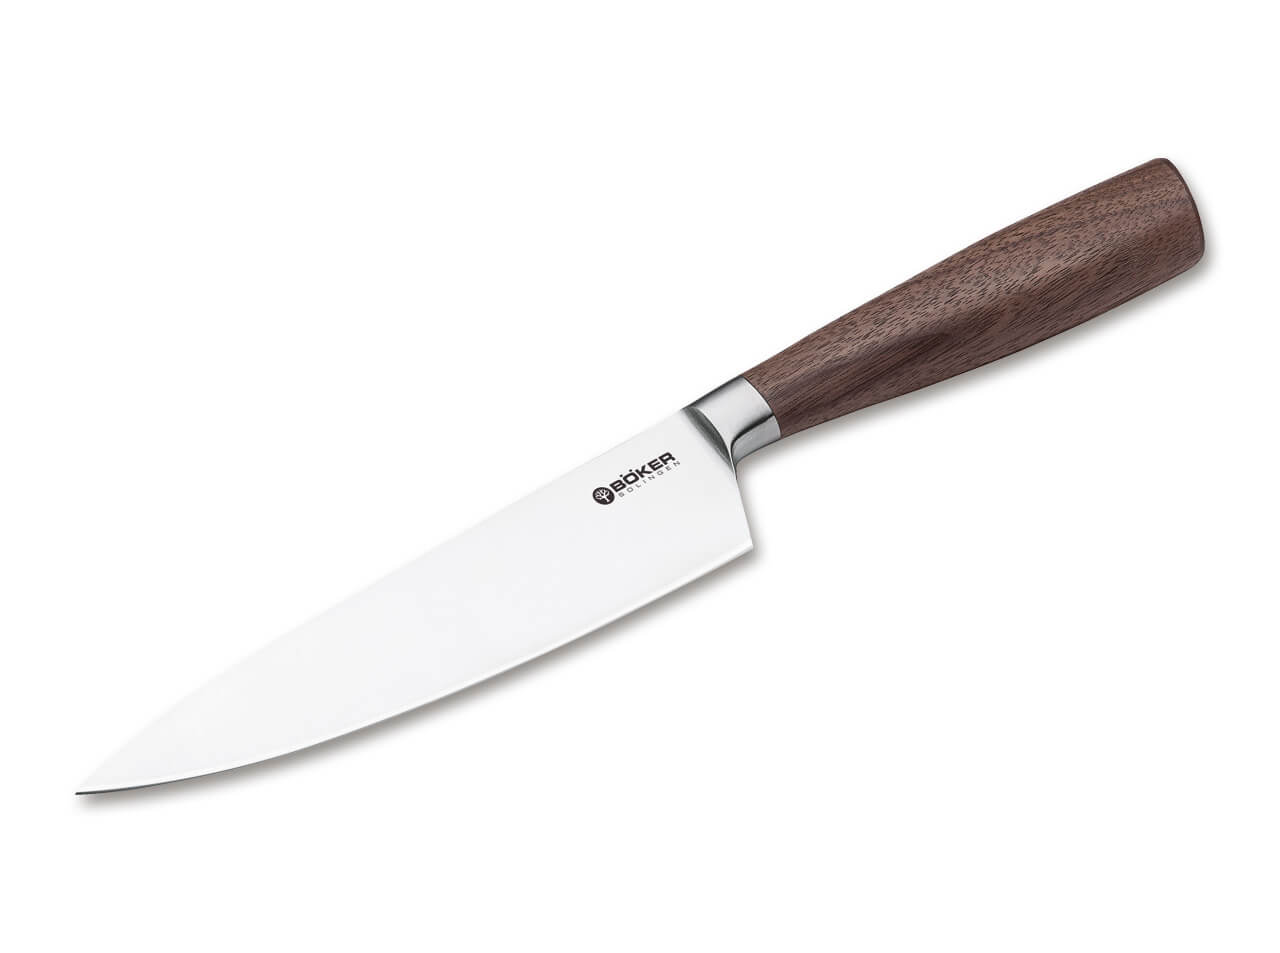 Недорогие кухонные ножи. Нож Boker Manufaktur Solingen. Boker нож поварской Core 16 см. Boker нож для хлеба Core 21,9 см. Нож Sensei x50crmov15.